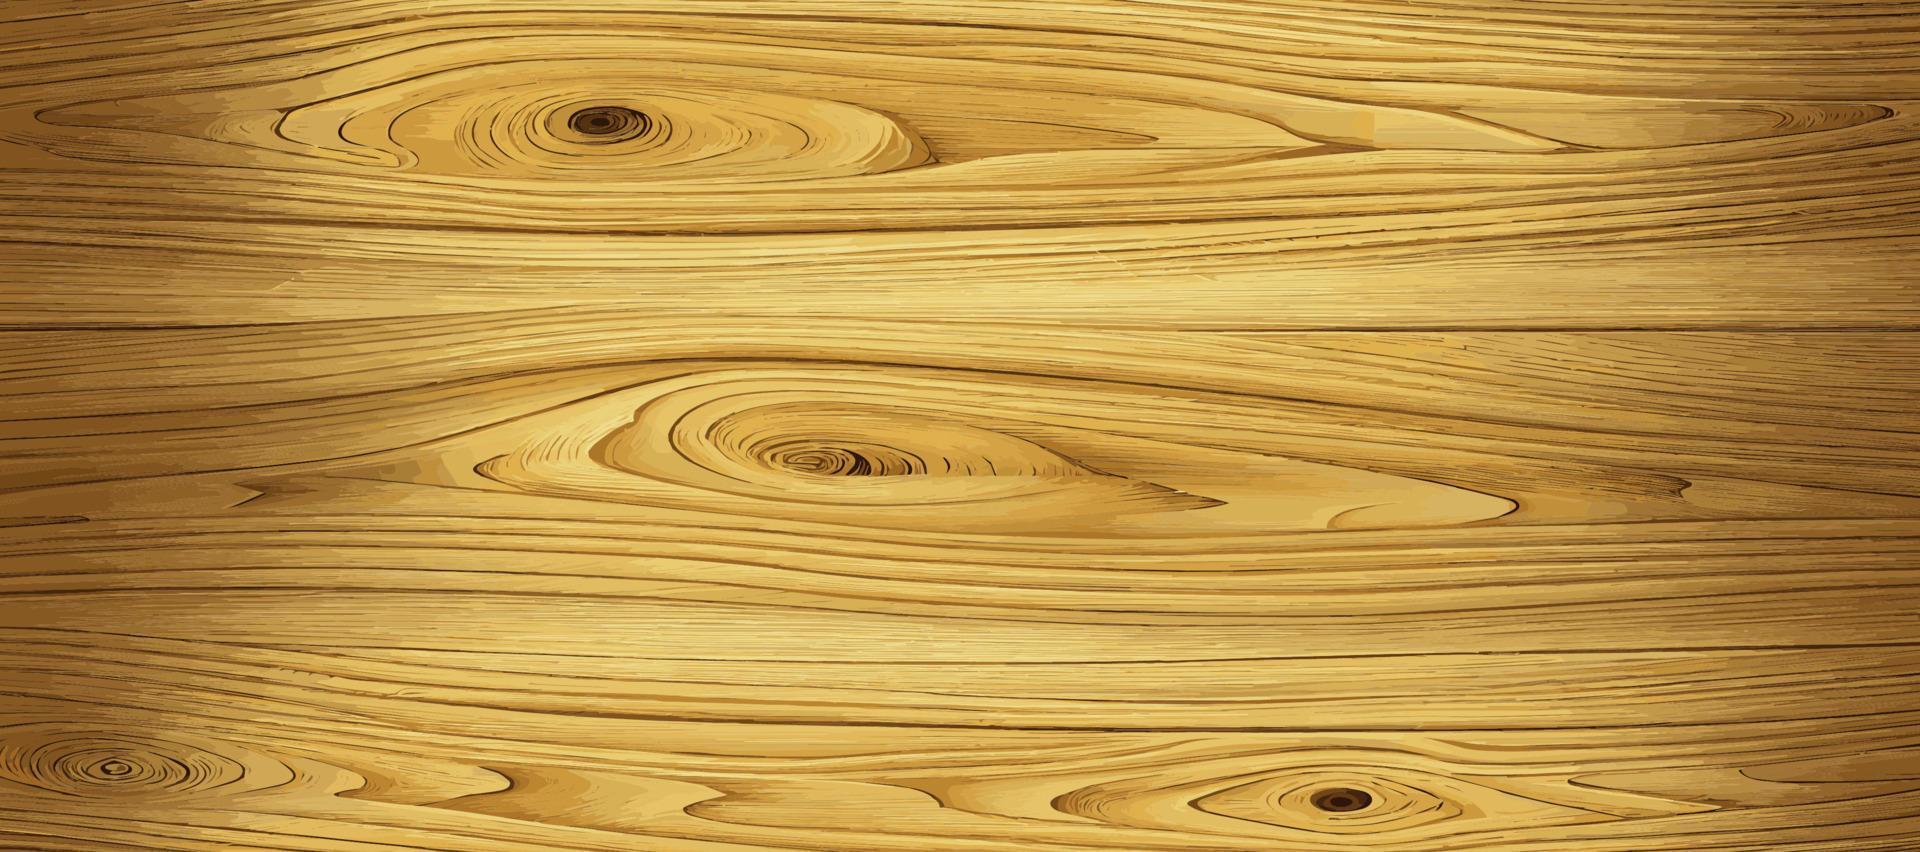 textura de madeira clara panorâmica com nós, fundo de prancha - vector